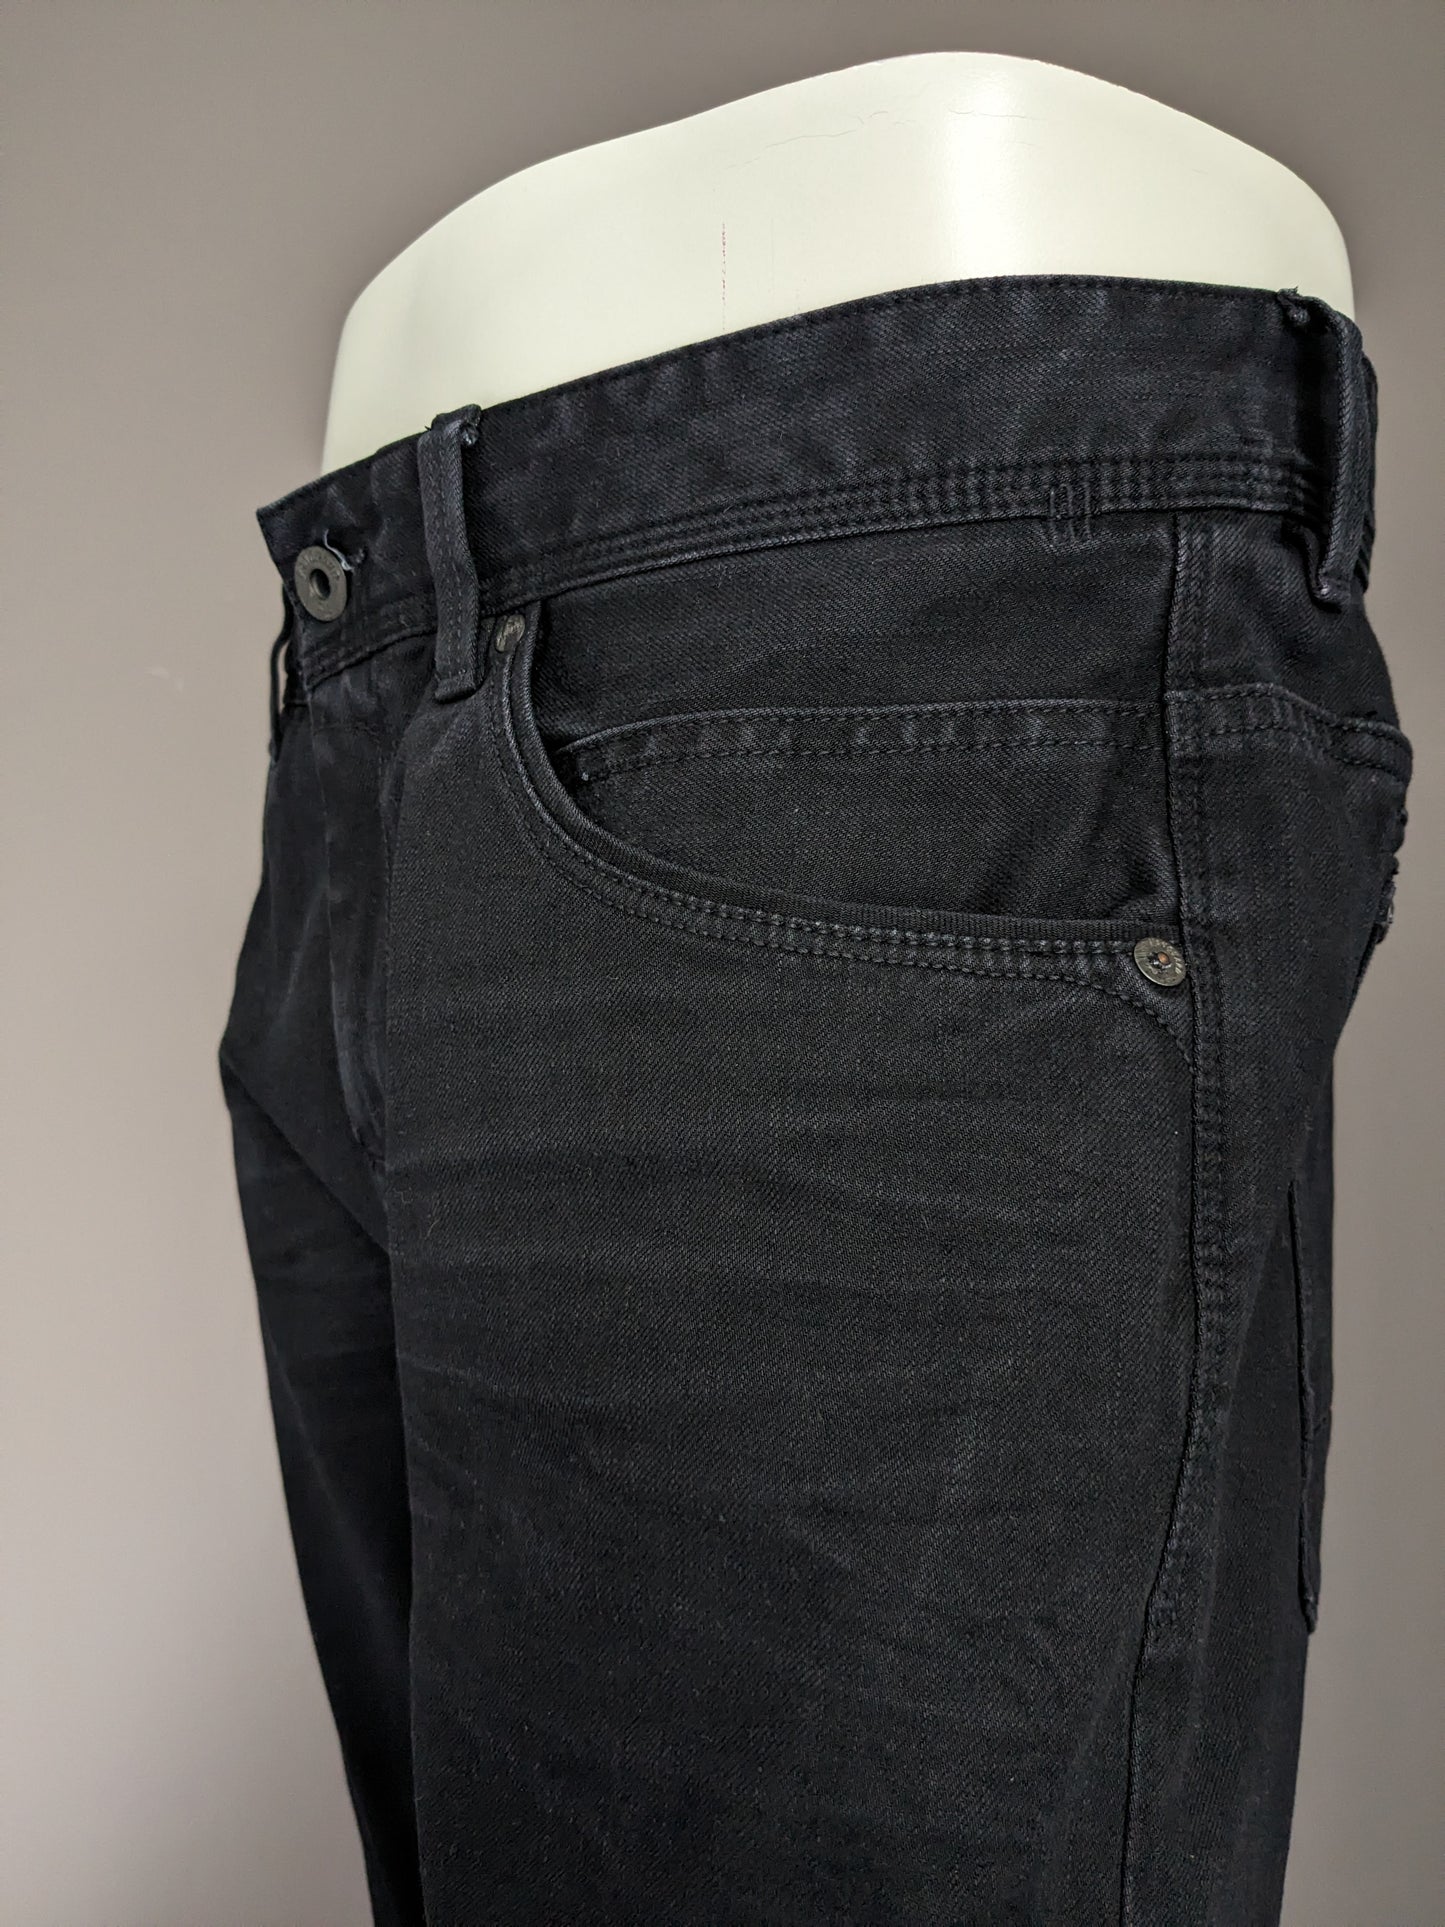 Vanguard jeans. Black colored. Size W34 - L36. stretch. Type "V850 Rider". Slim fit.